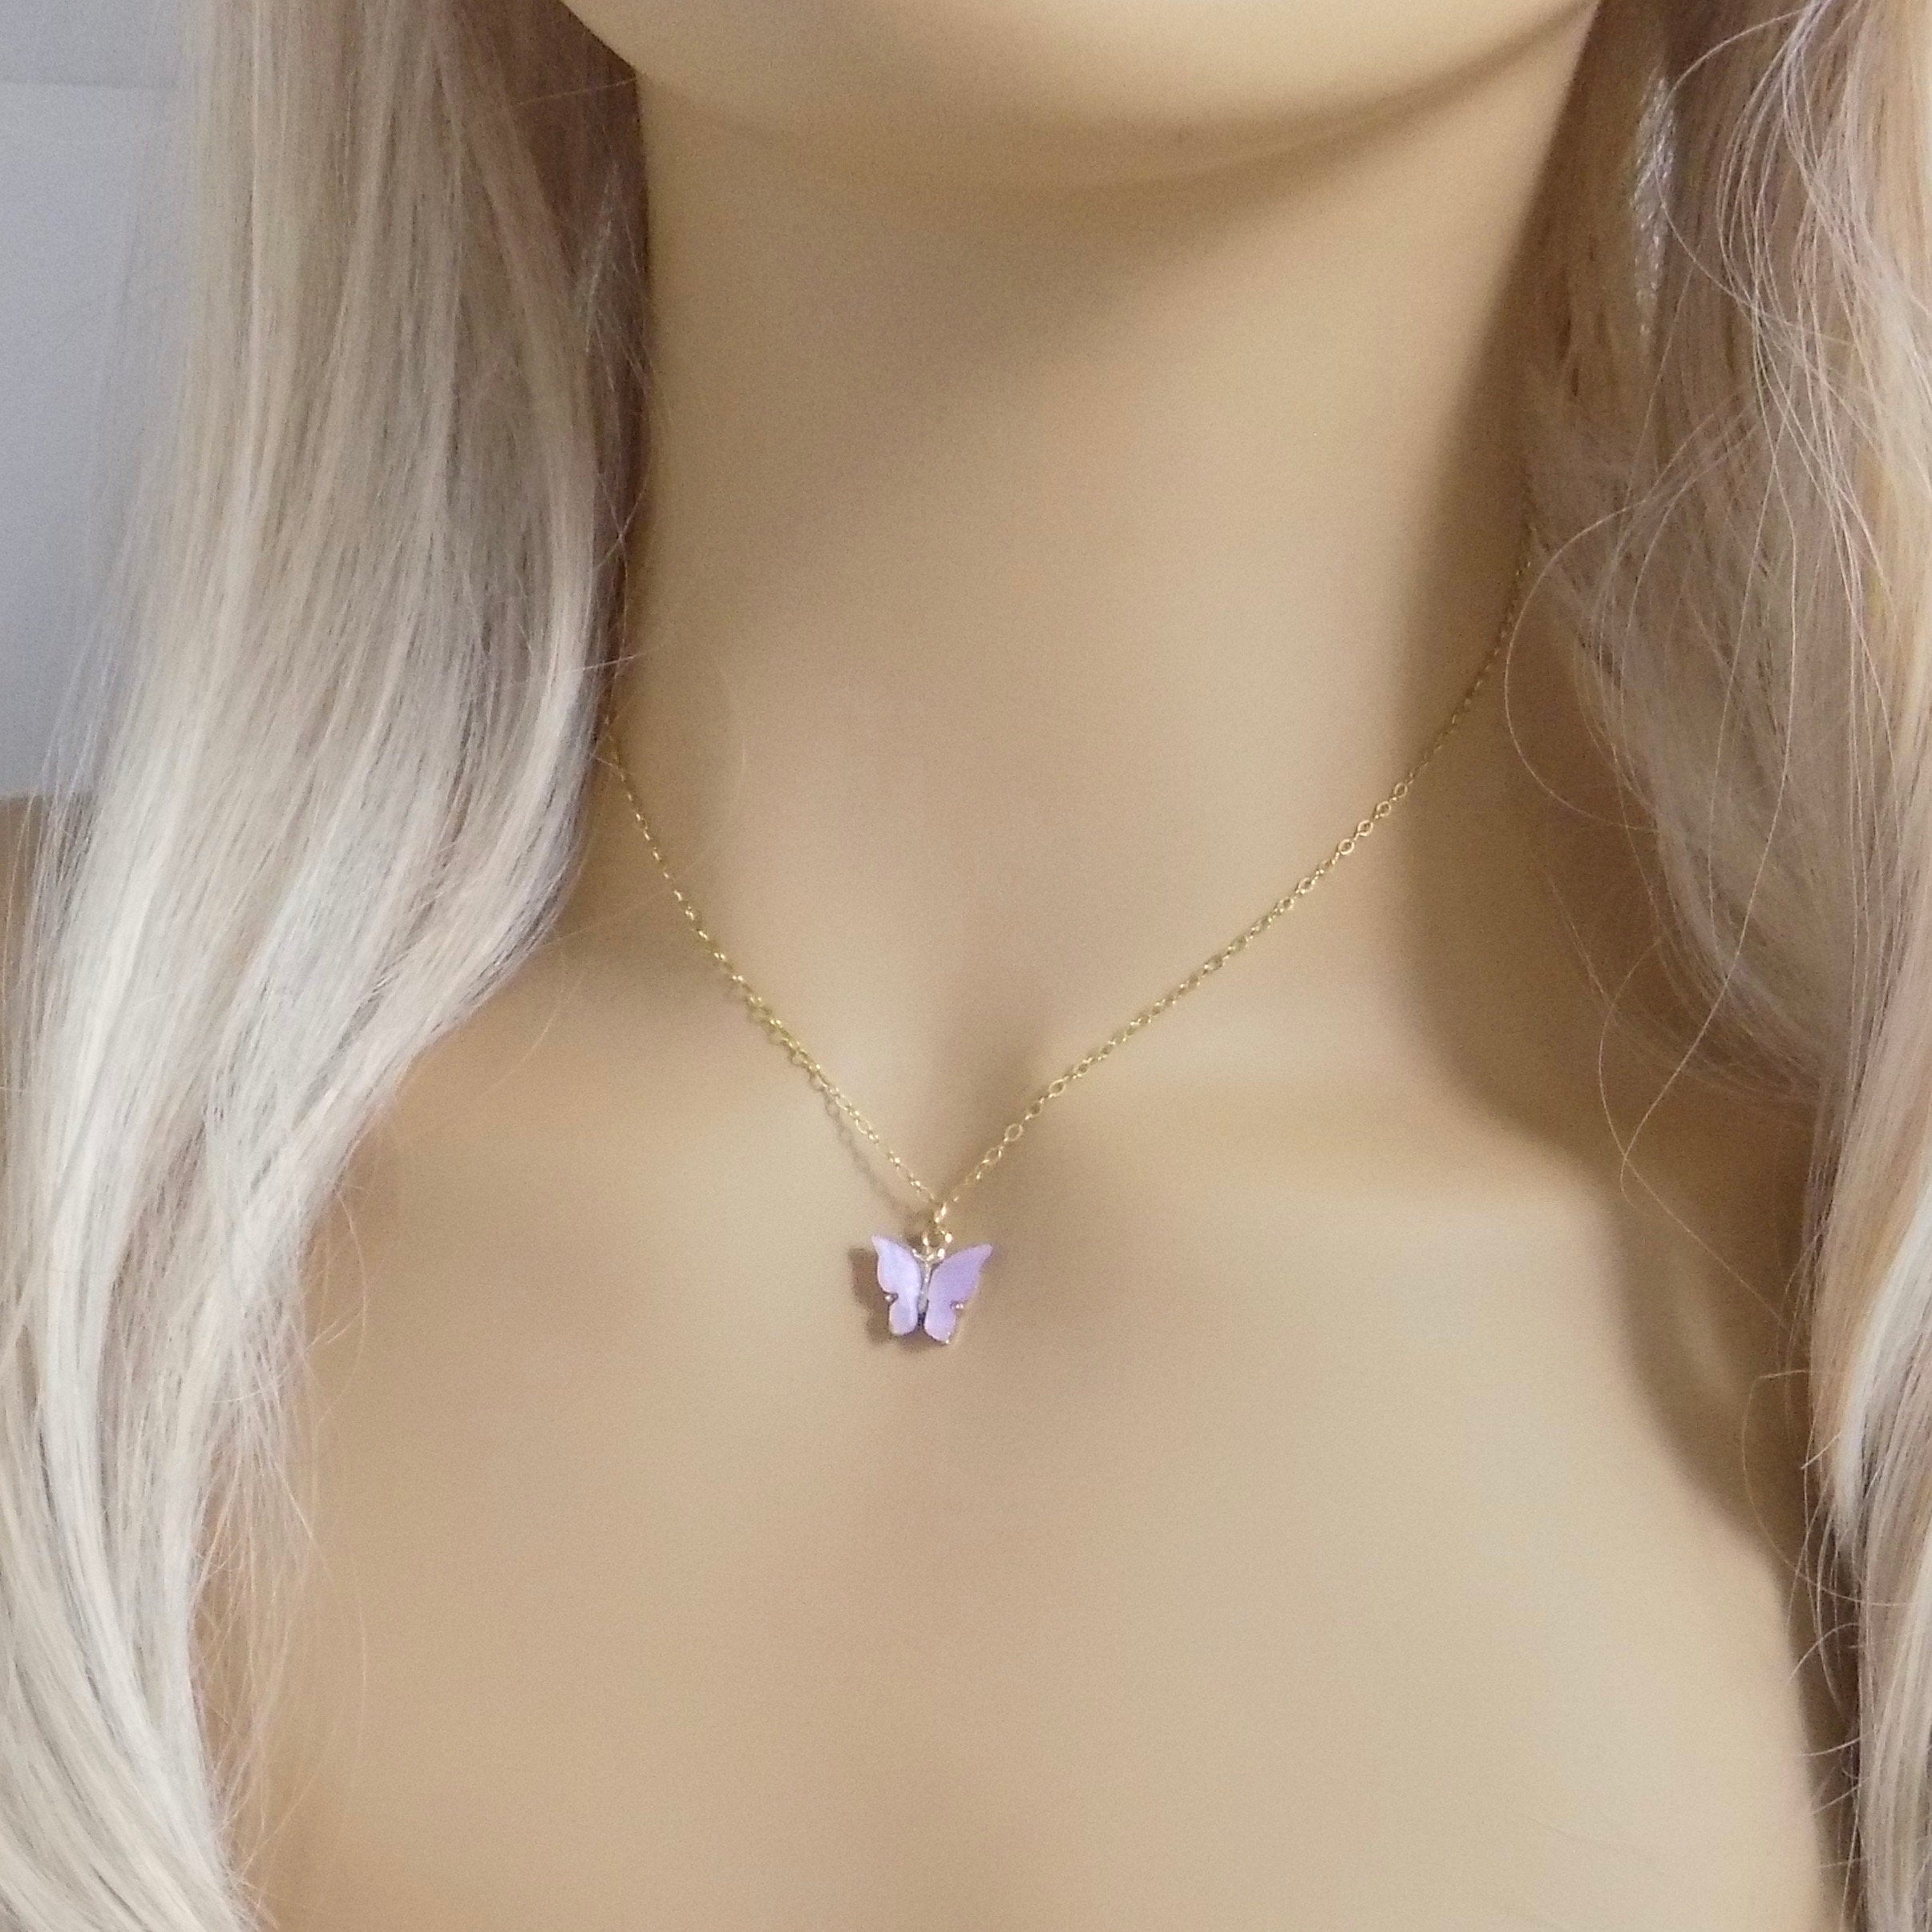 Buy Niscka Butterfly Charm Necklace online